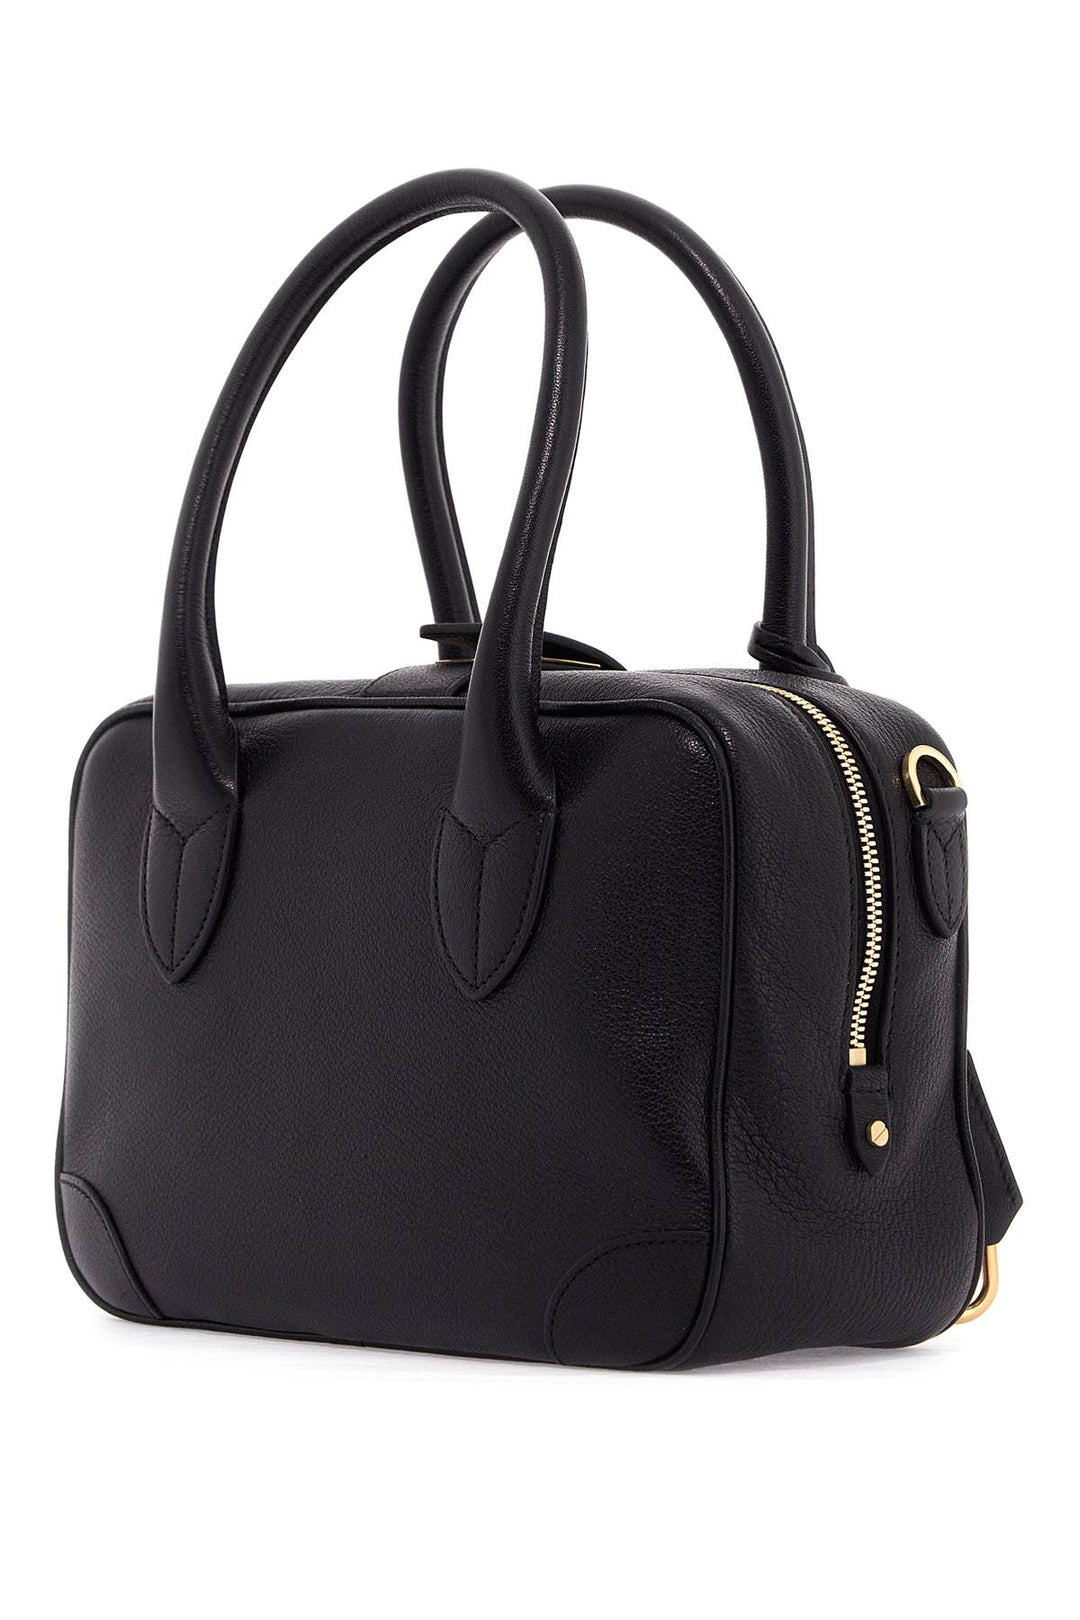 Golden Goose Leather Handbag For Everyday Use.   Black